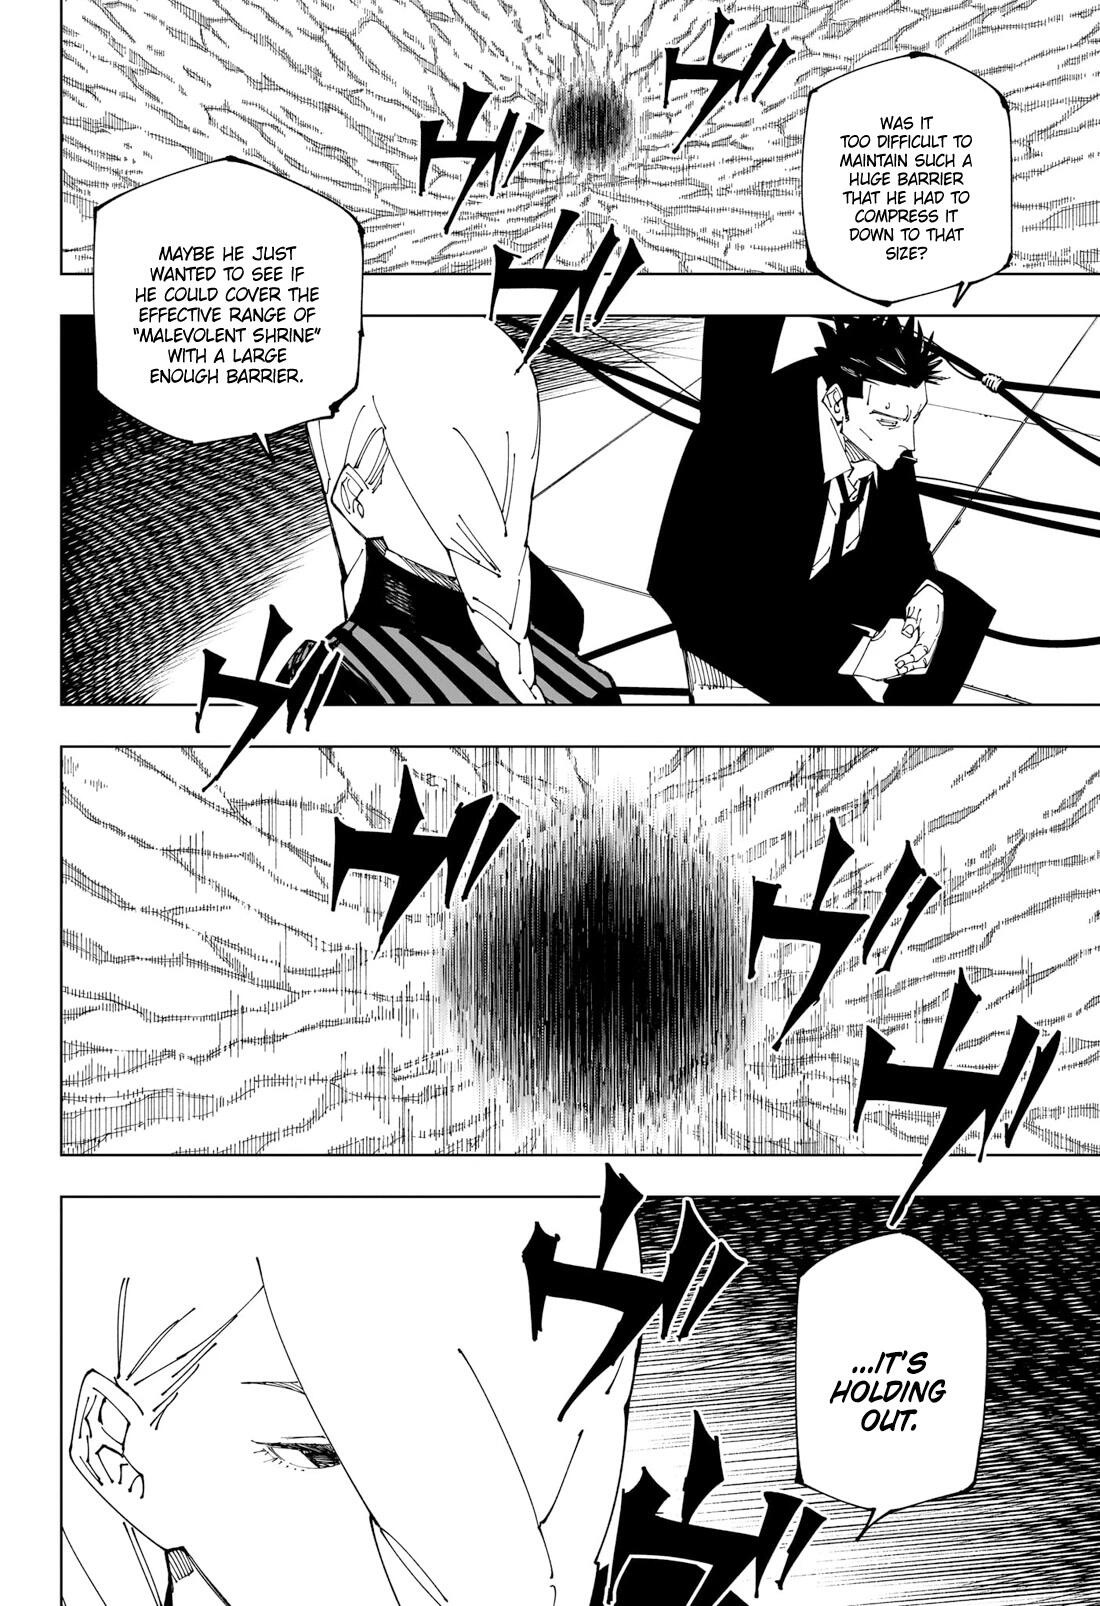 Jujutsu Kaisen Chapter 228: The Decisive Battle In The Uninhabited, Demon-Infested Shinjuku ⑥ page 5 - Mangakakalot